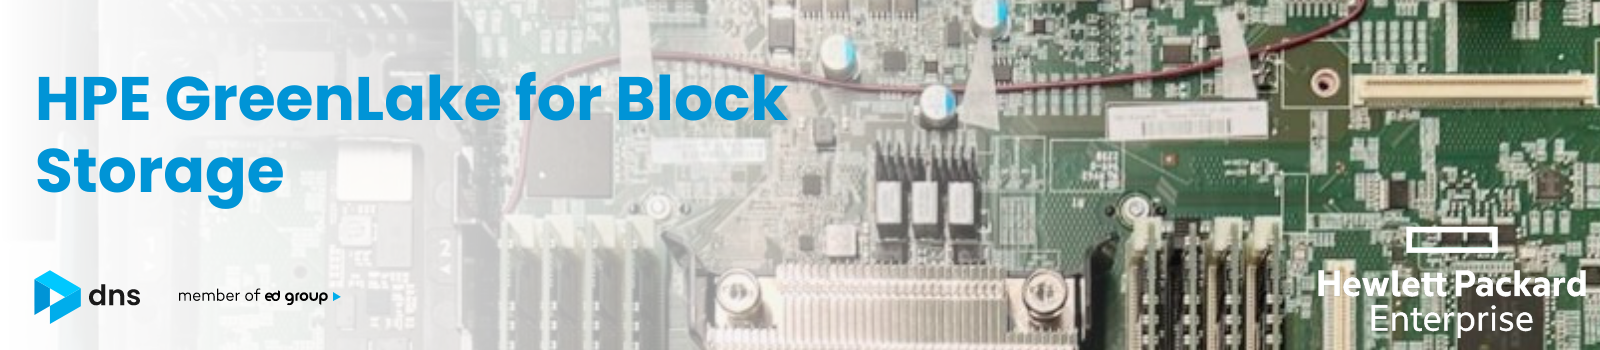 HPE GreenLake for Block Storage